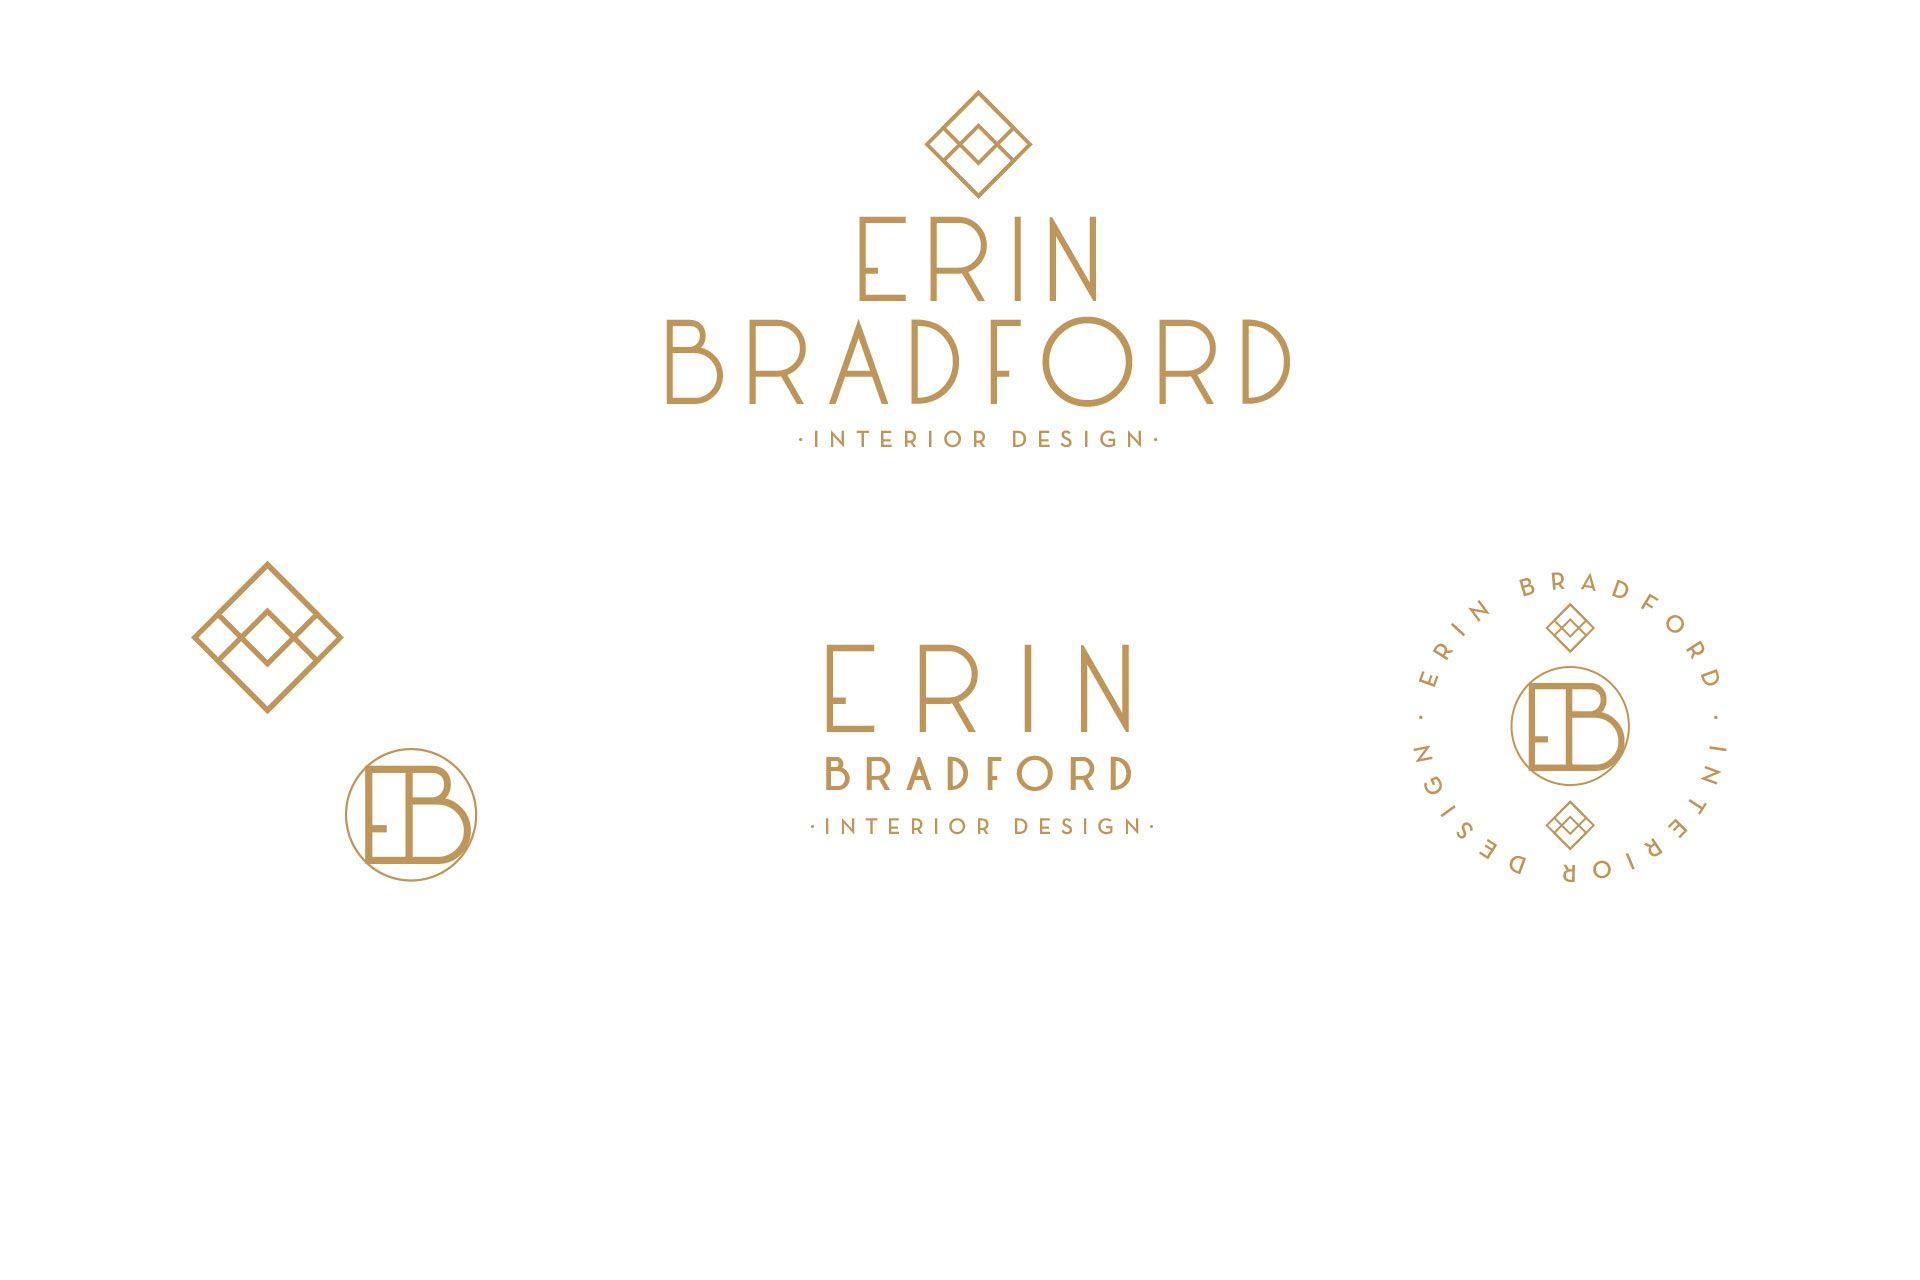 Bradford Logo - Funktional Branding. Erin Bradford Edition